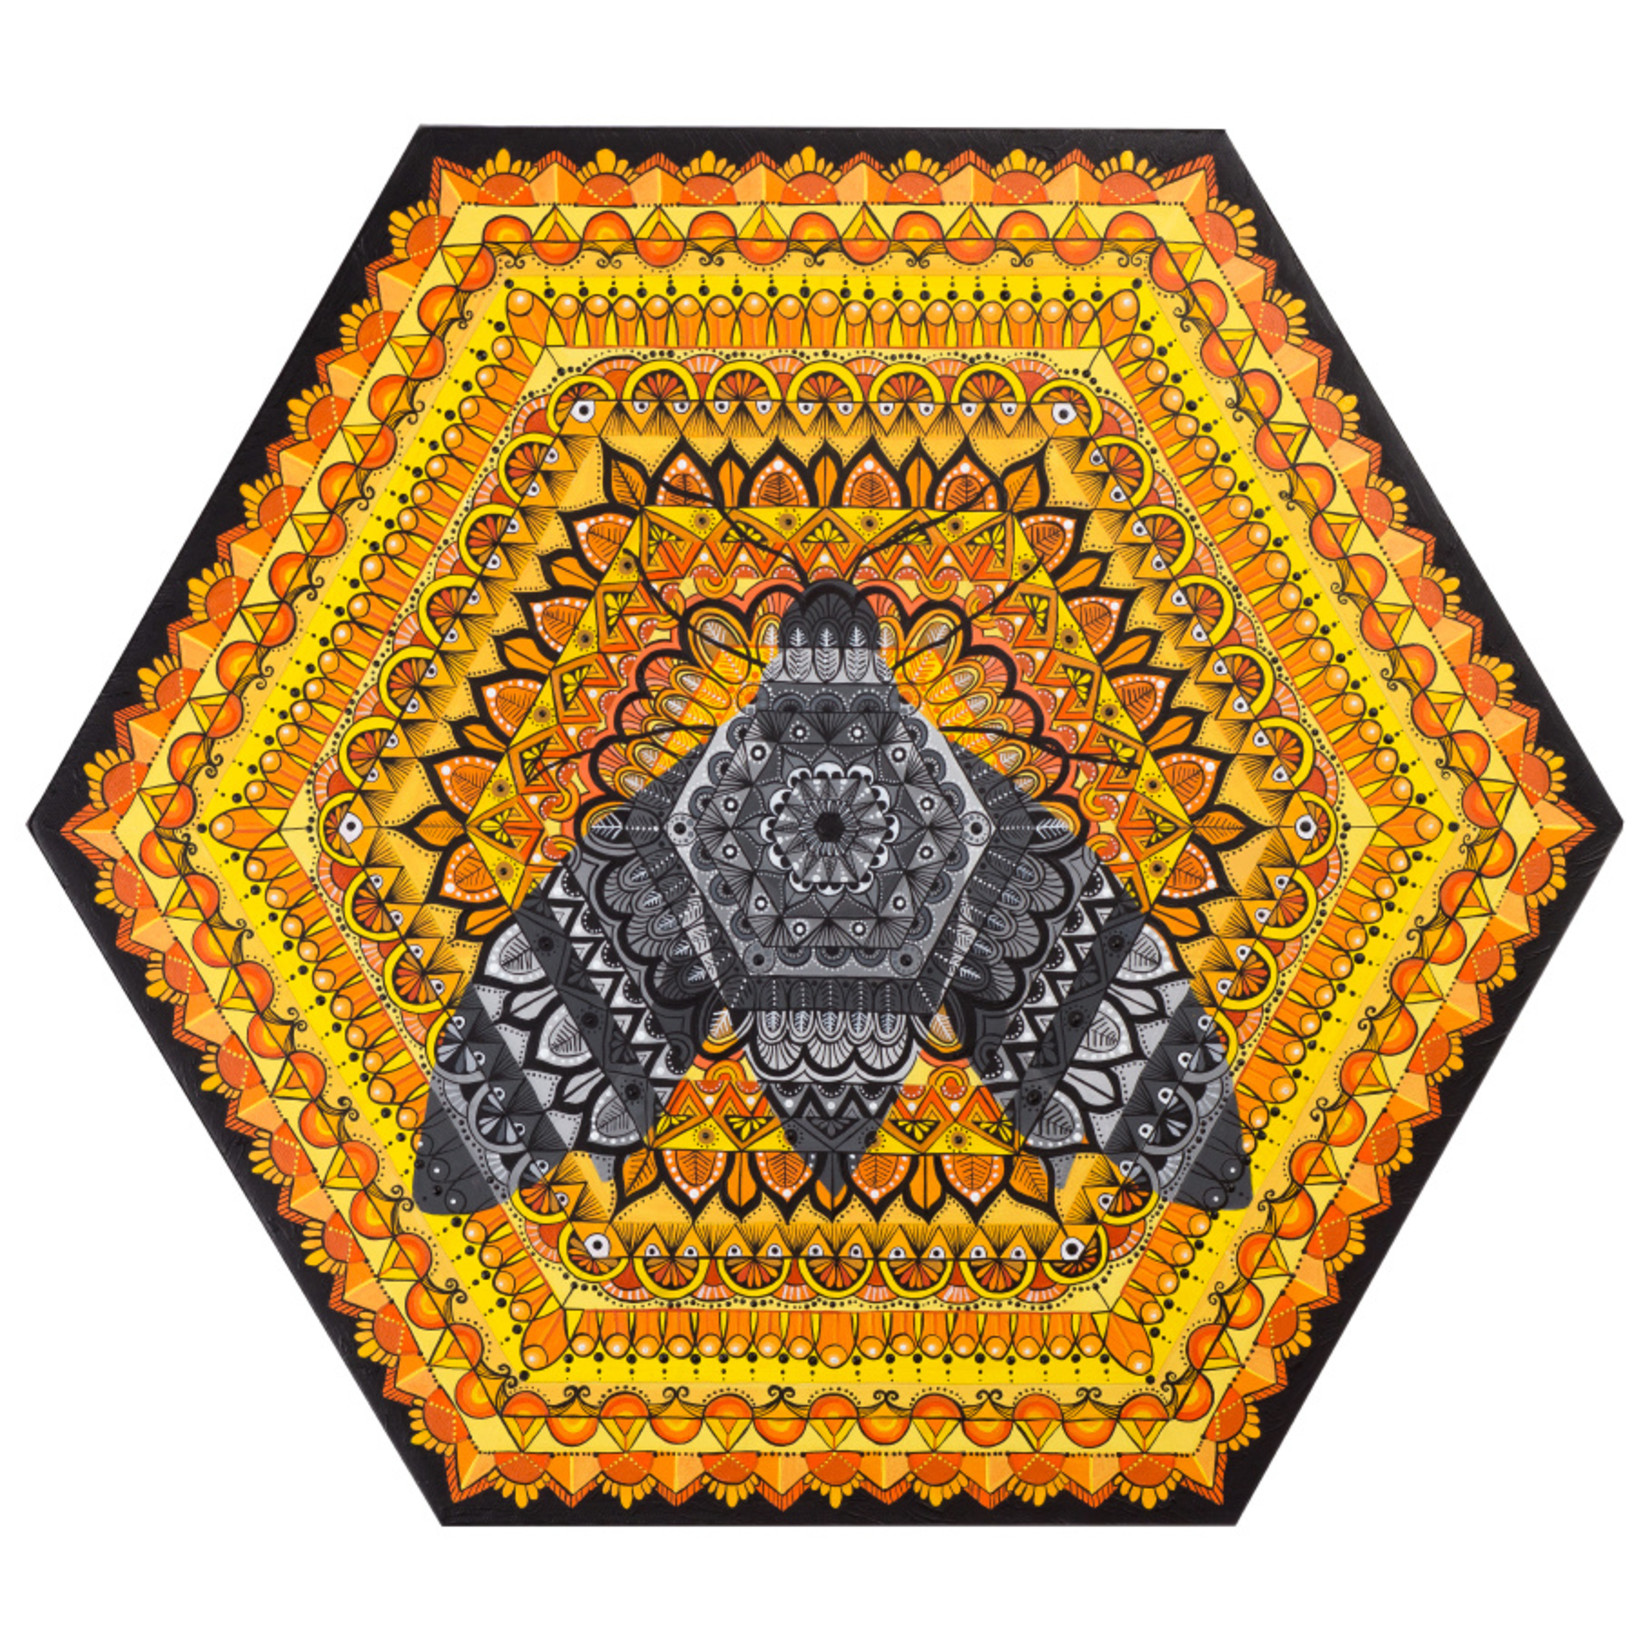 Stirling Studios "Queen Bee" Mandala Canvas Print